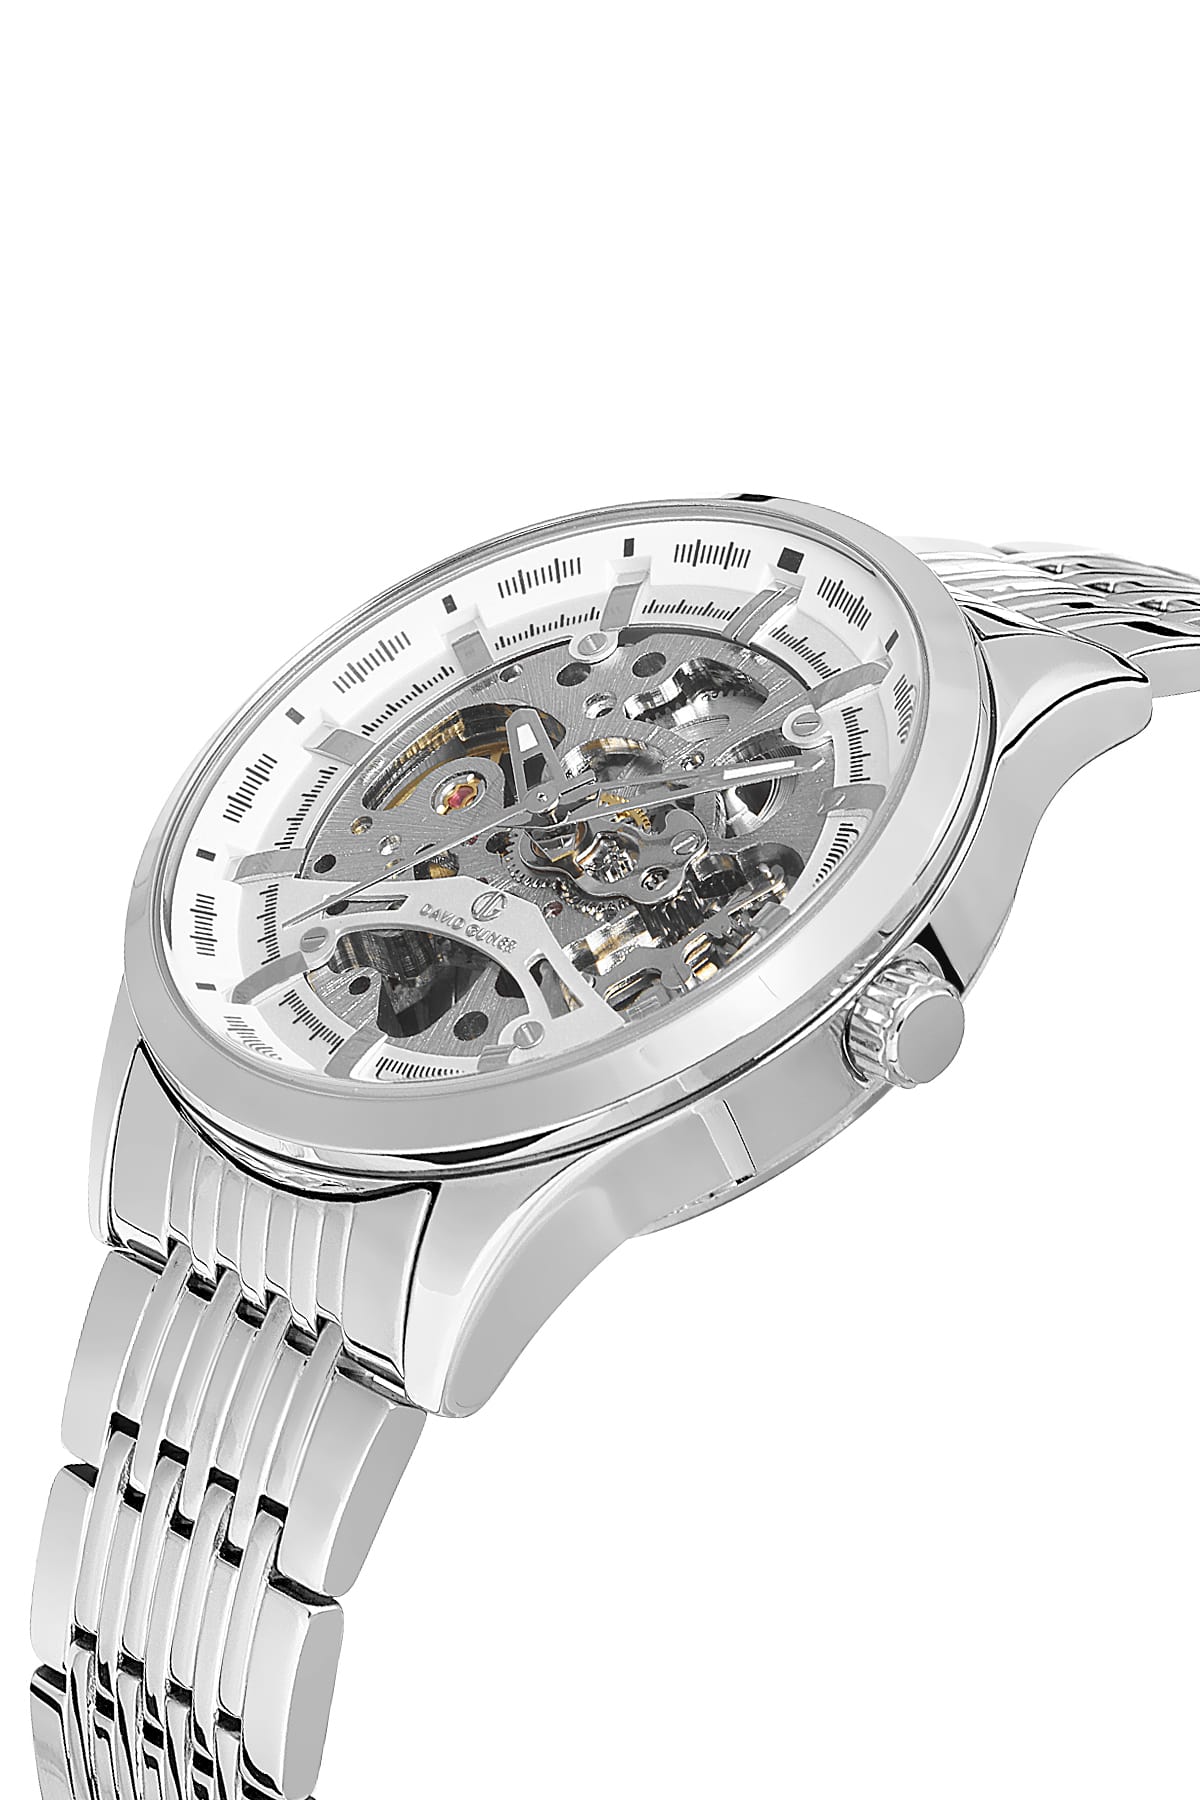 DAVID GUNER Silver Plated Automatic Function Men's Wristwatch